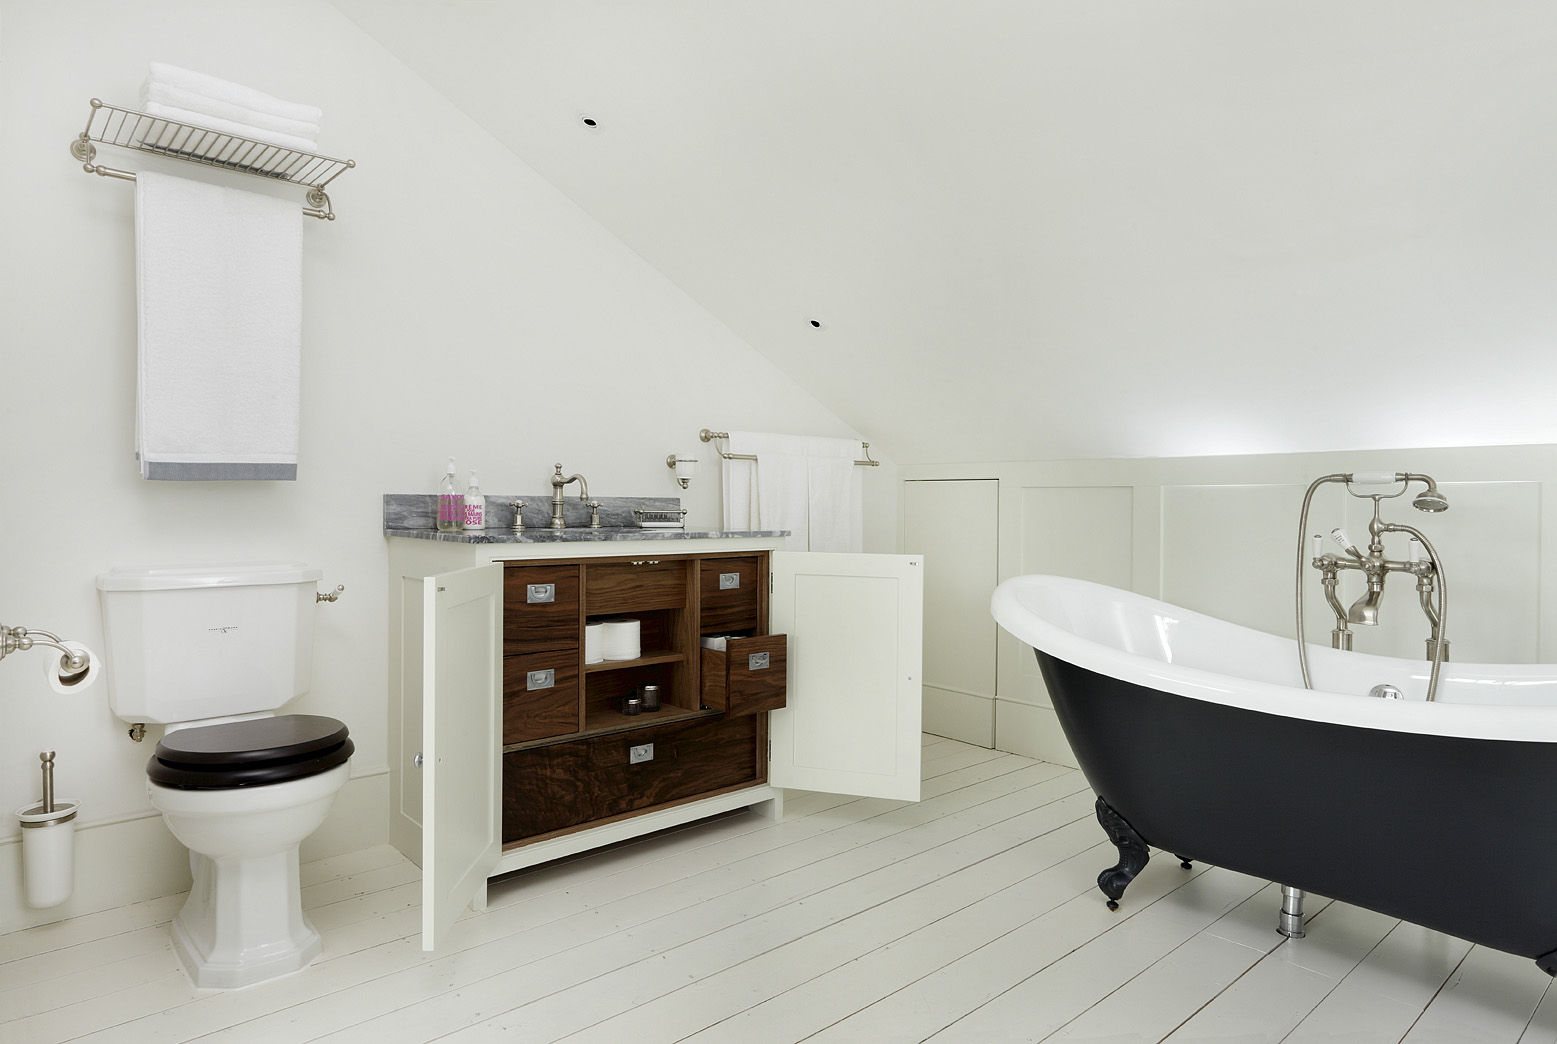 BATHROOMS: TRADITIONAL-STYLE BATHROOM Cue & Co of London Phòng tắm phong cách kinh điển